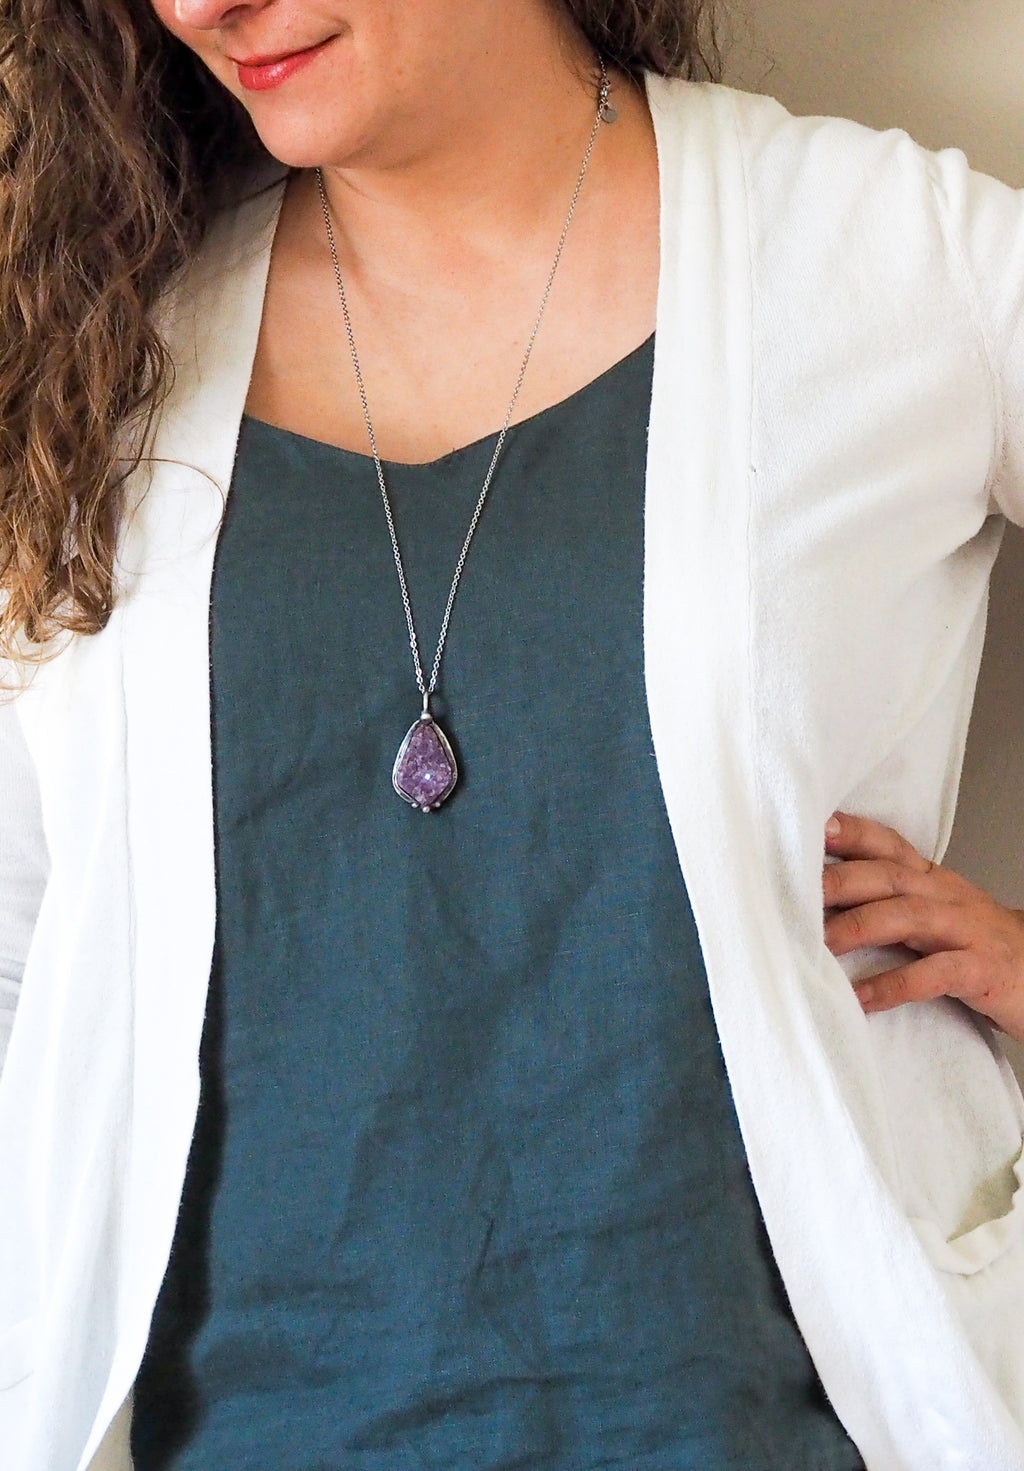 purple crystal talisman necklace on woman in blue top